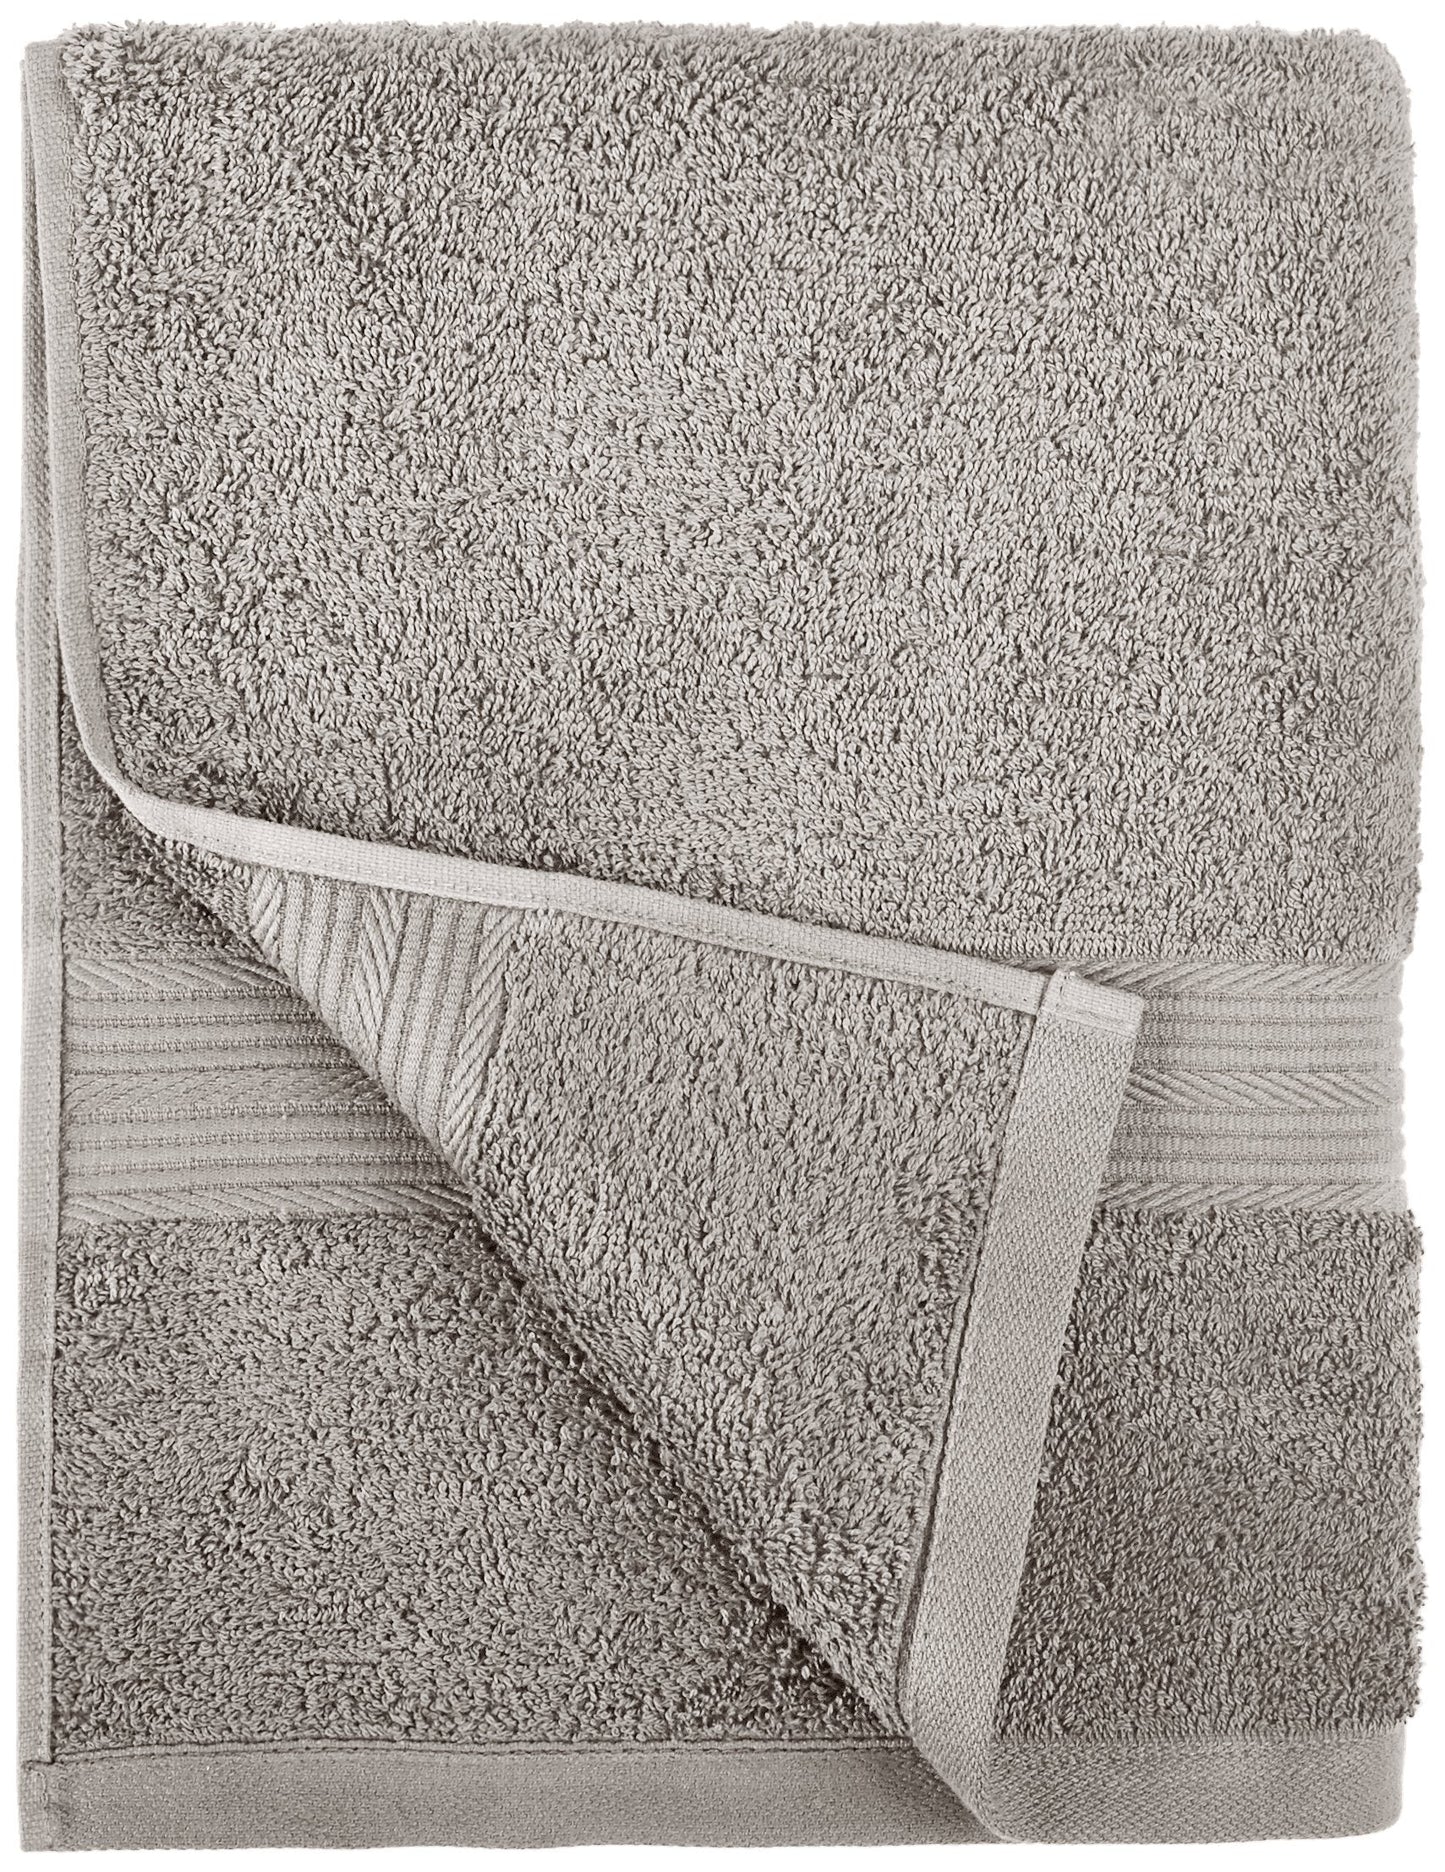 Basics 6-Piece Fade Resistant Bath towel, Hand and Washcloth Set - Cotton, Gray, 14.25" L x 10.85" W